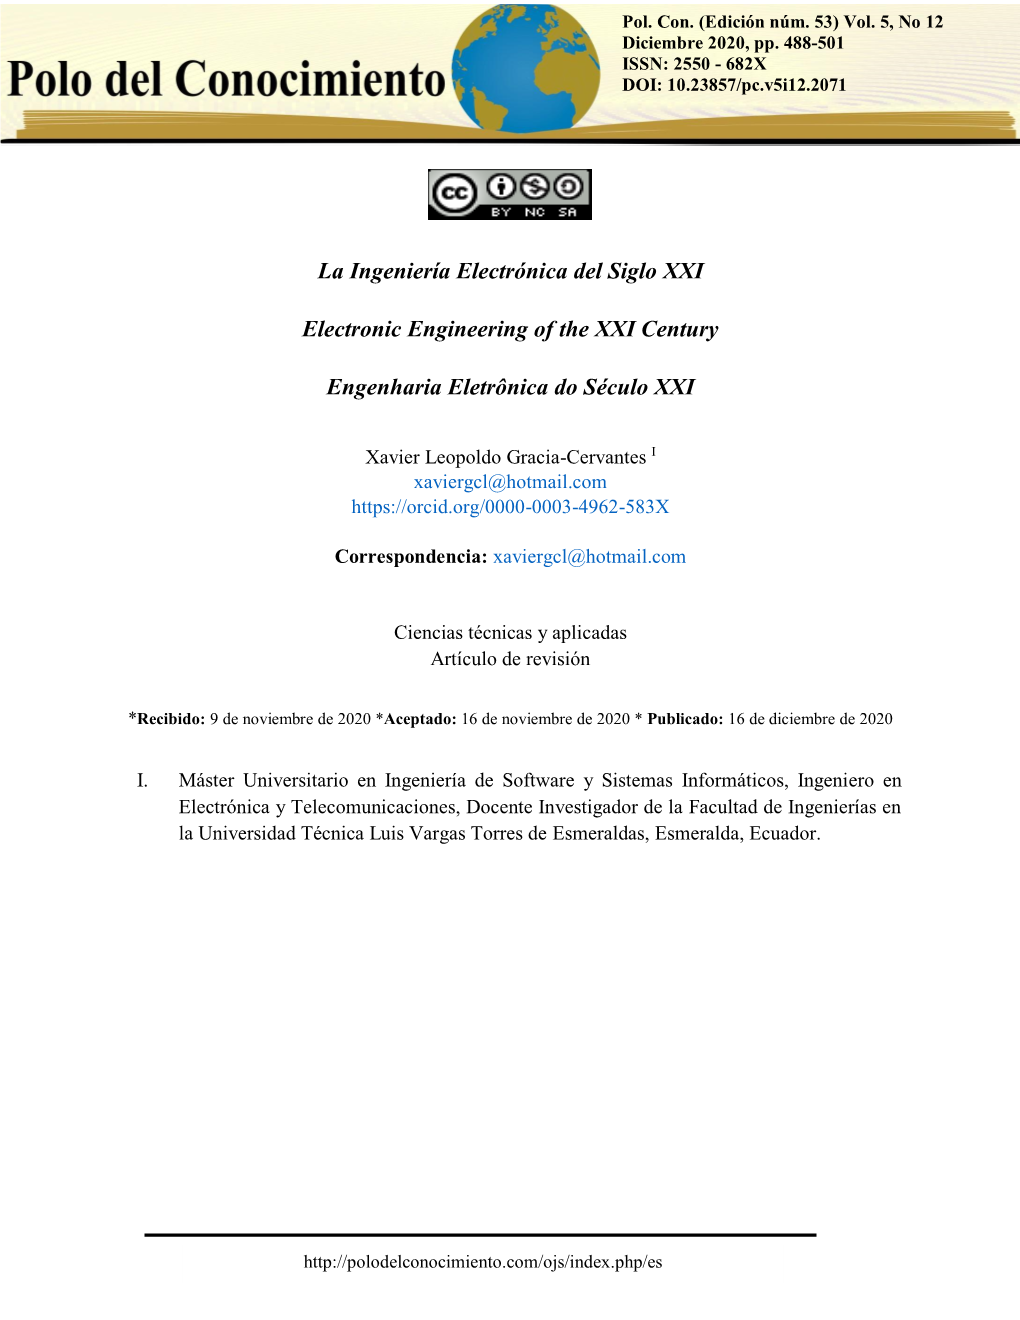 La Ingeniería Electrónica Del Siglo XXI Electronic Engineering of the XXI